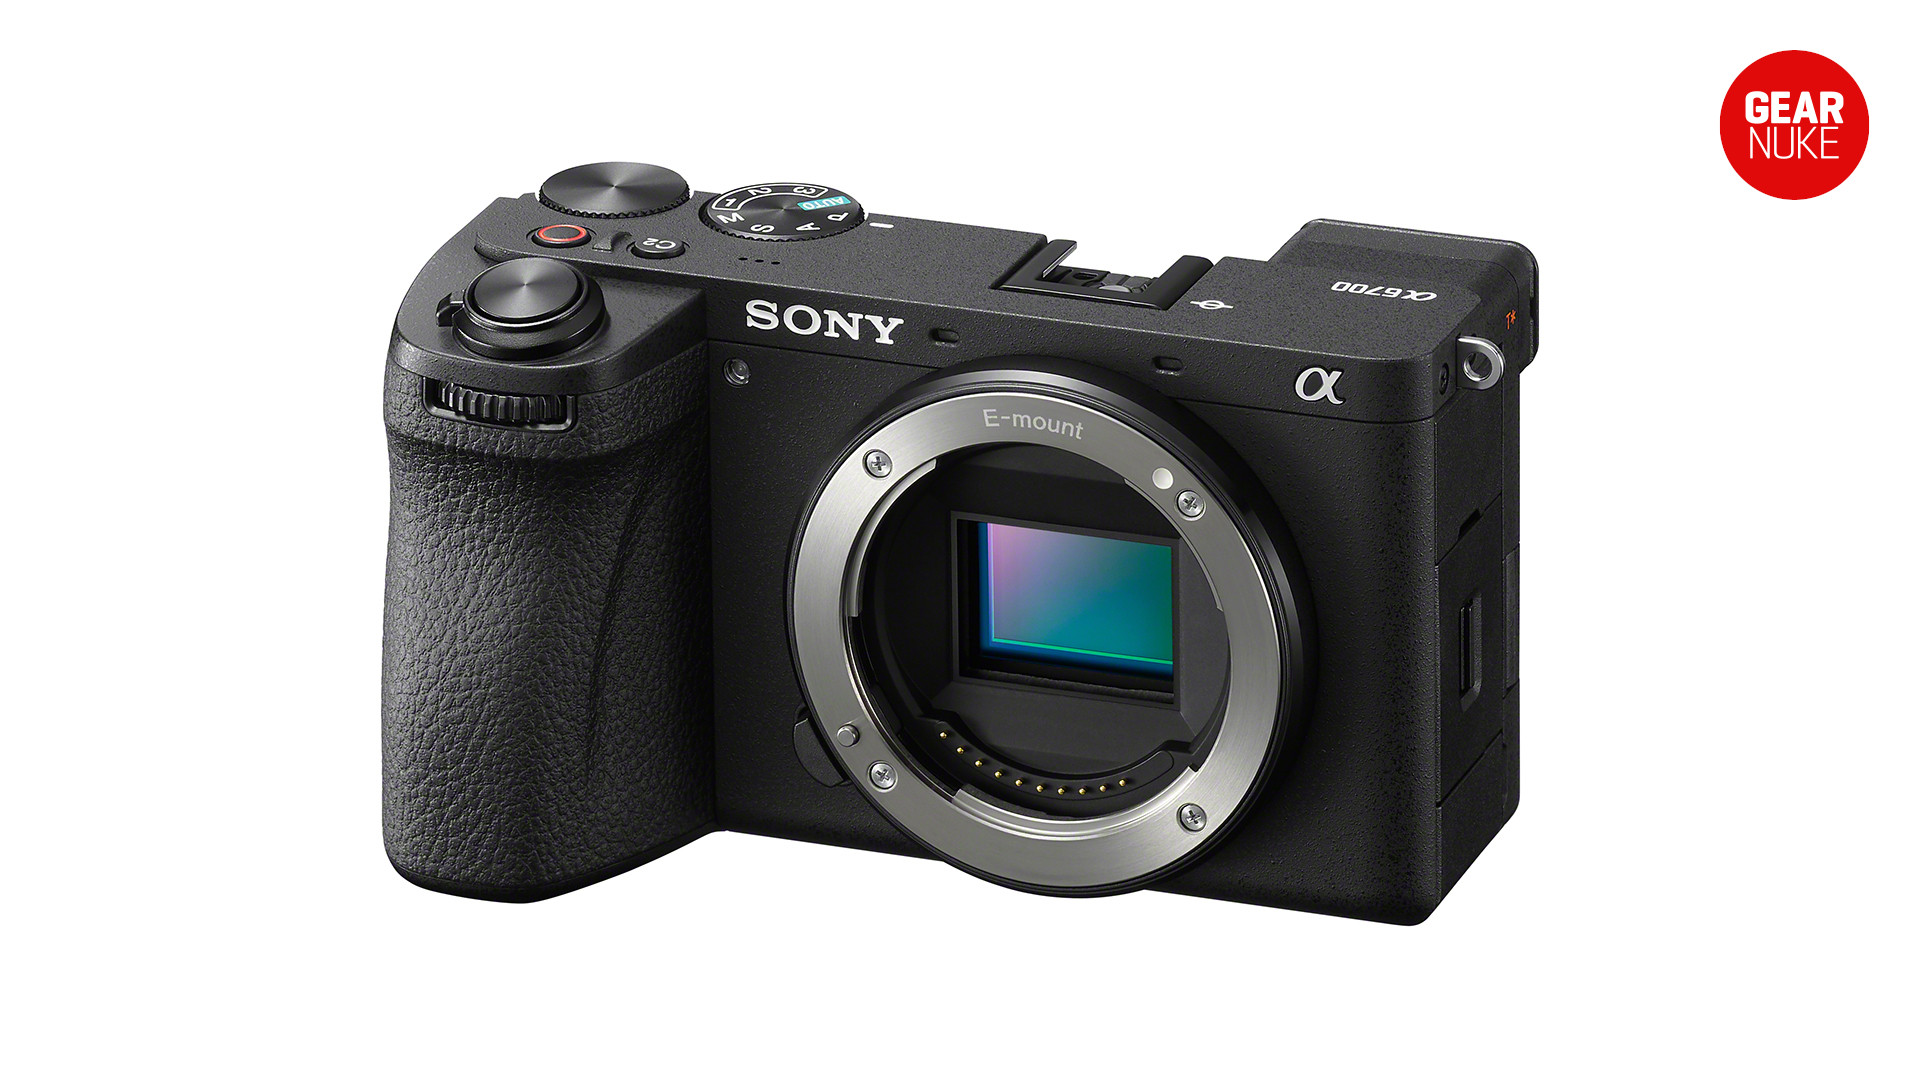 Casey Neistat Camera - the Sony a6500